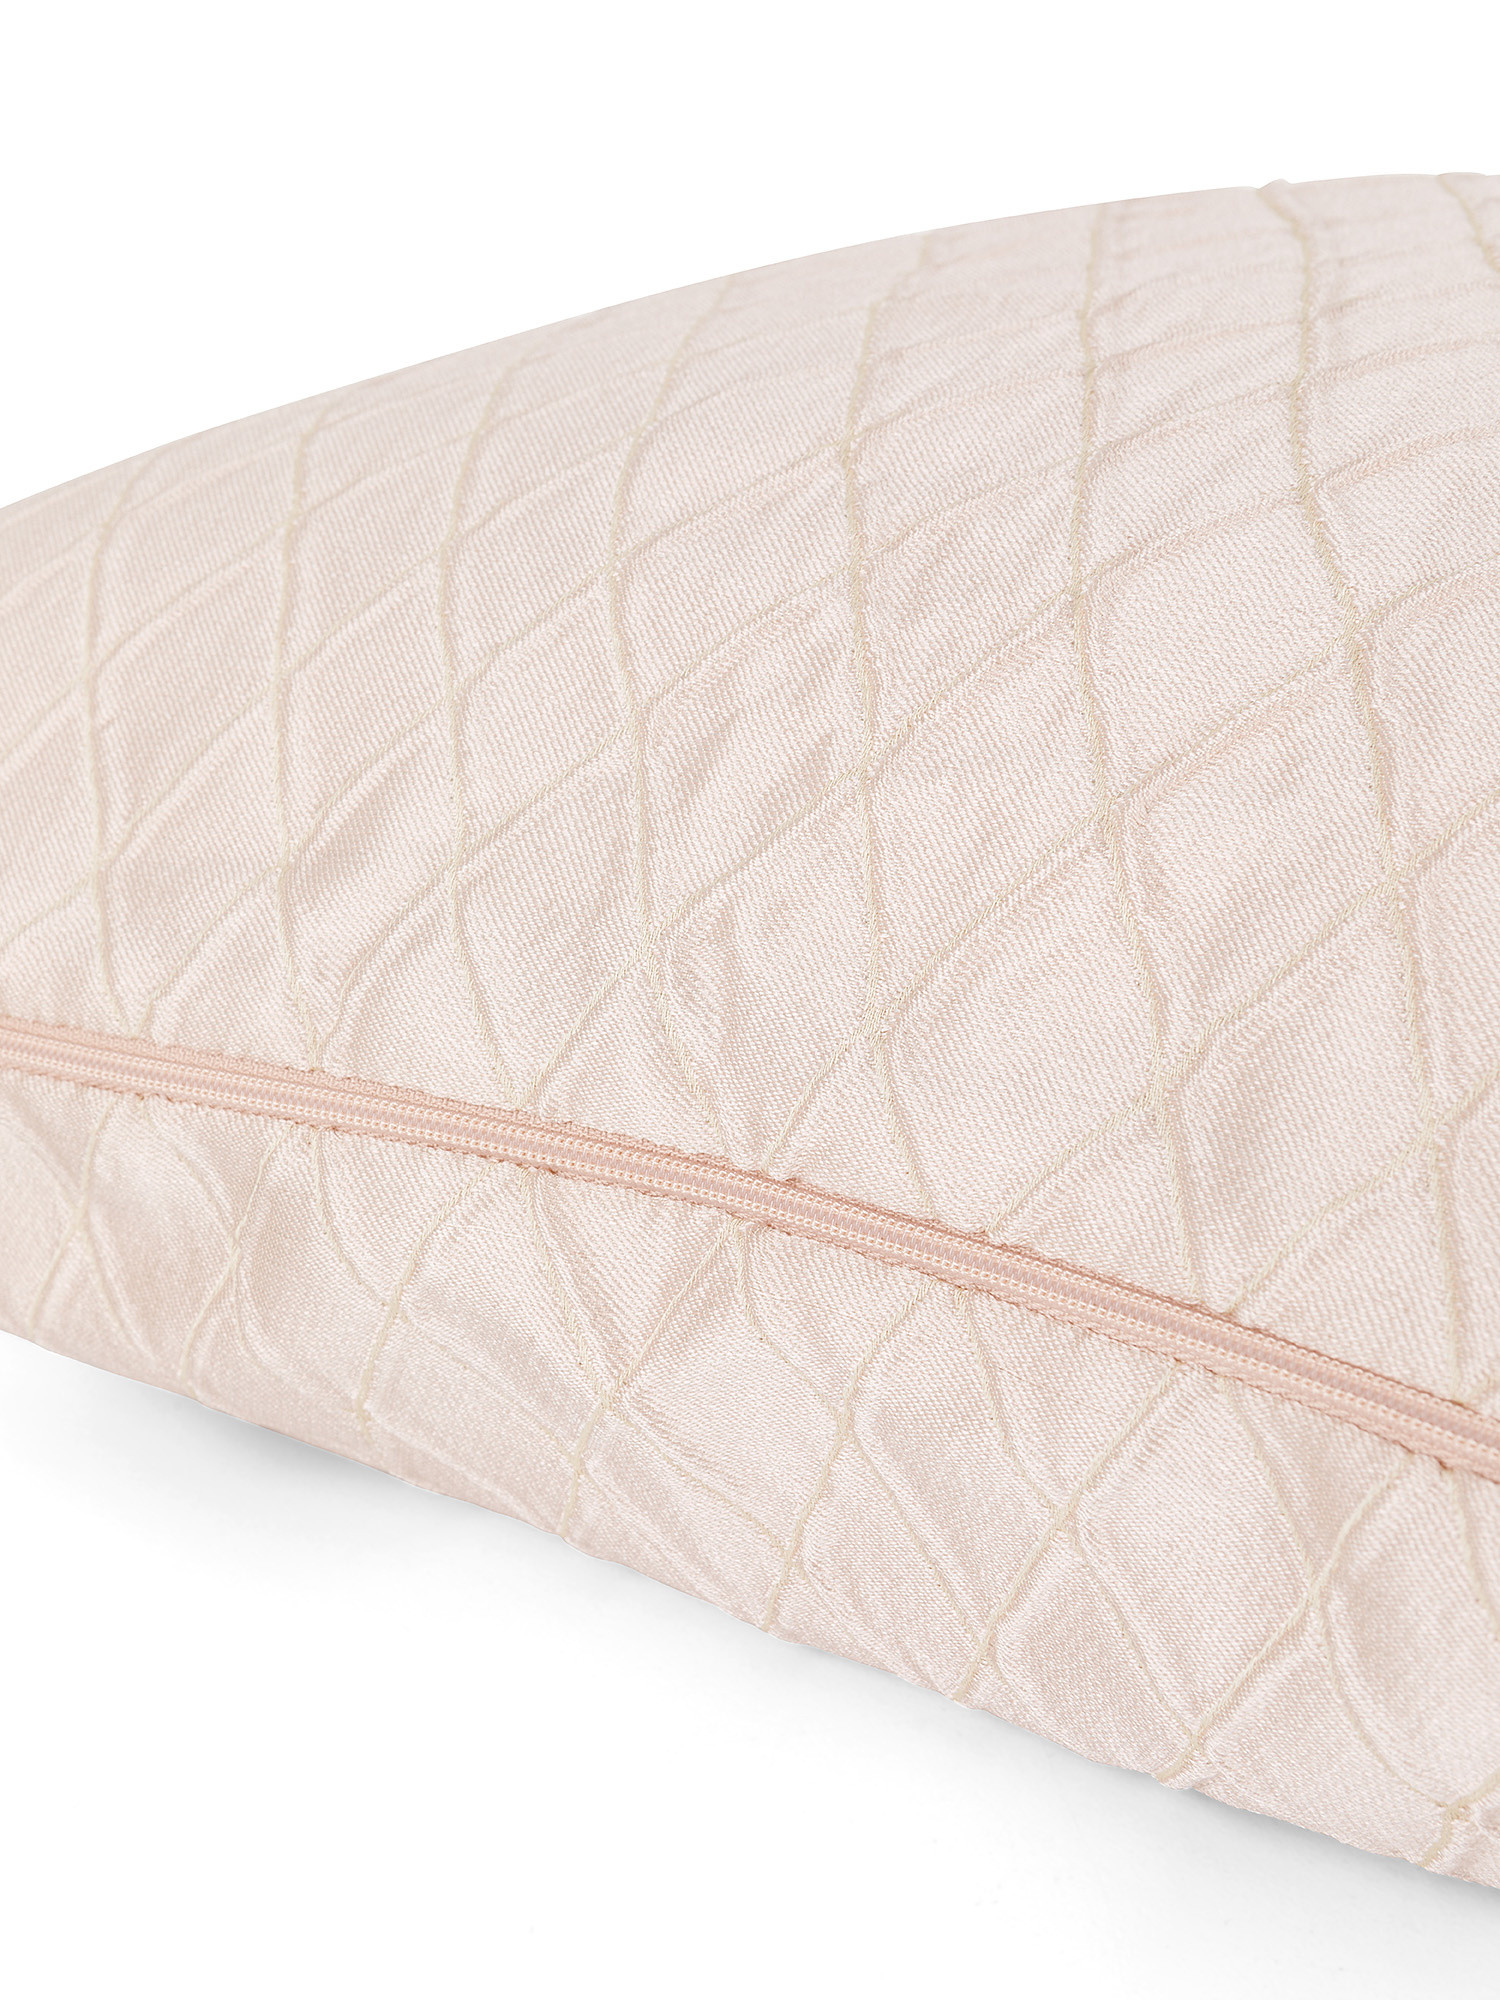 Jacquard cushion with rhombus motif 45x45cm, Pink, large image number 2